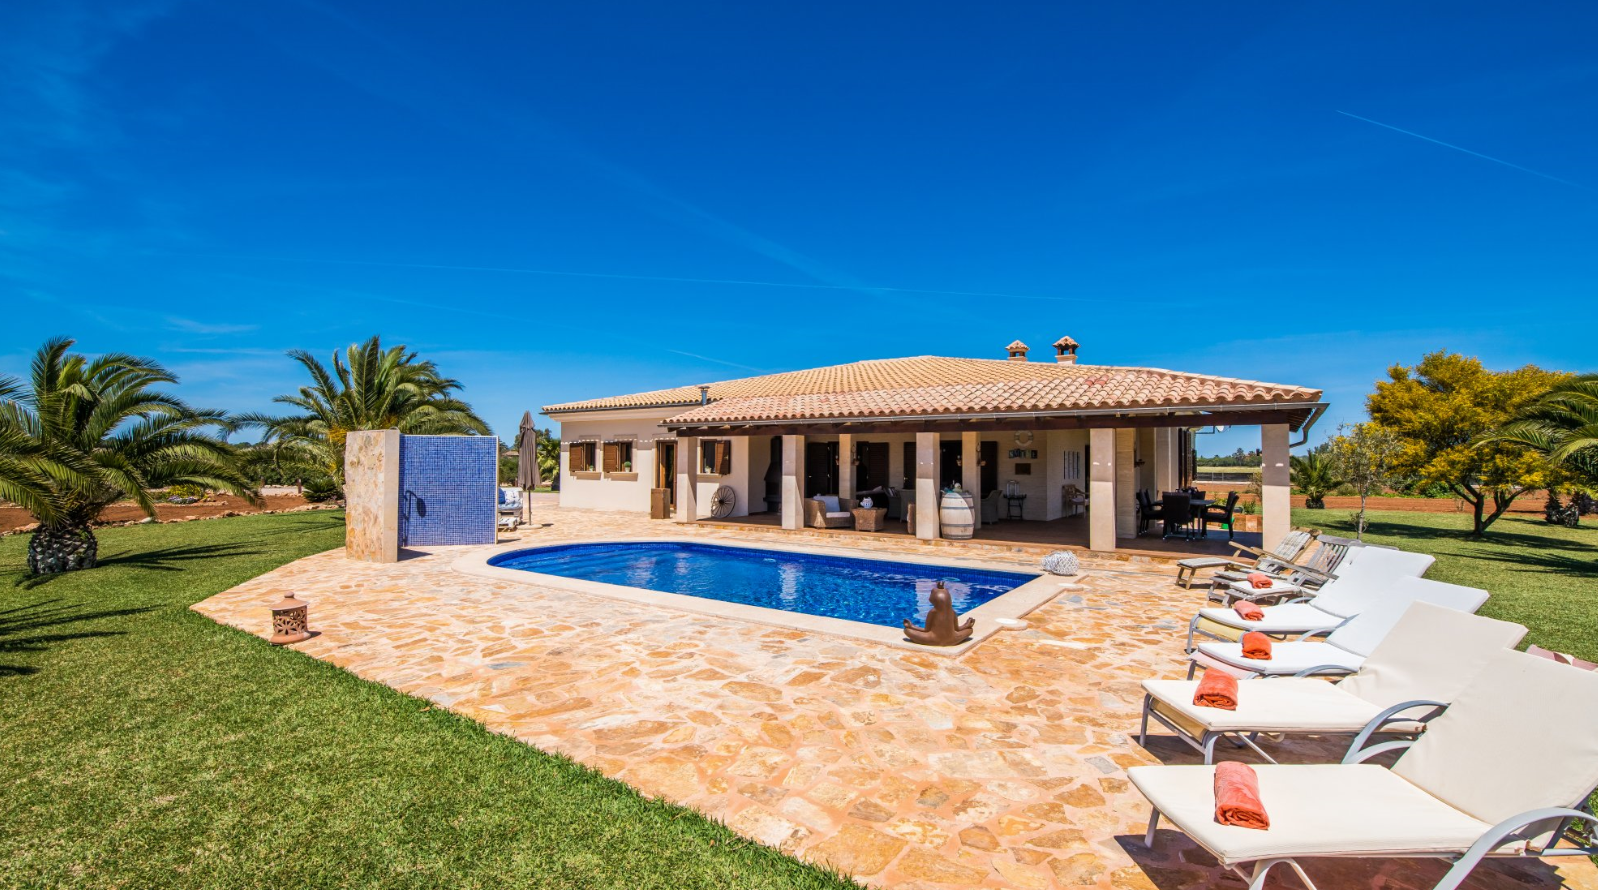 Ferienhaus mit Privatpool für 6 Personen ca 250 m² in Sa Rapita Mallorca Südküste von Mallorca